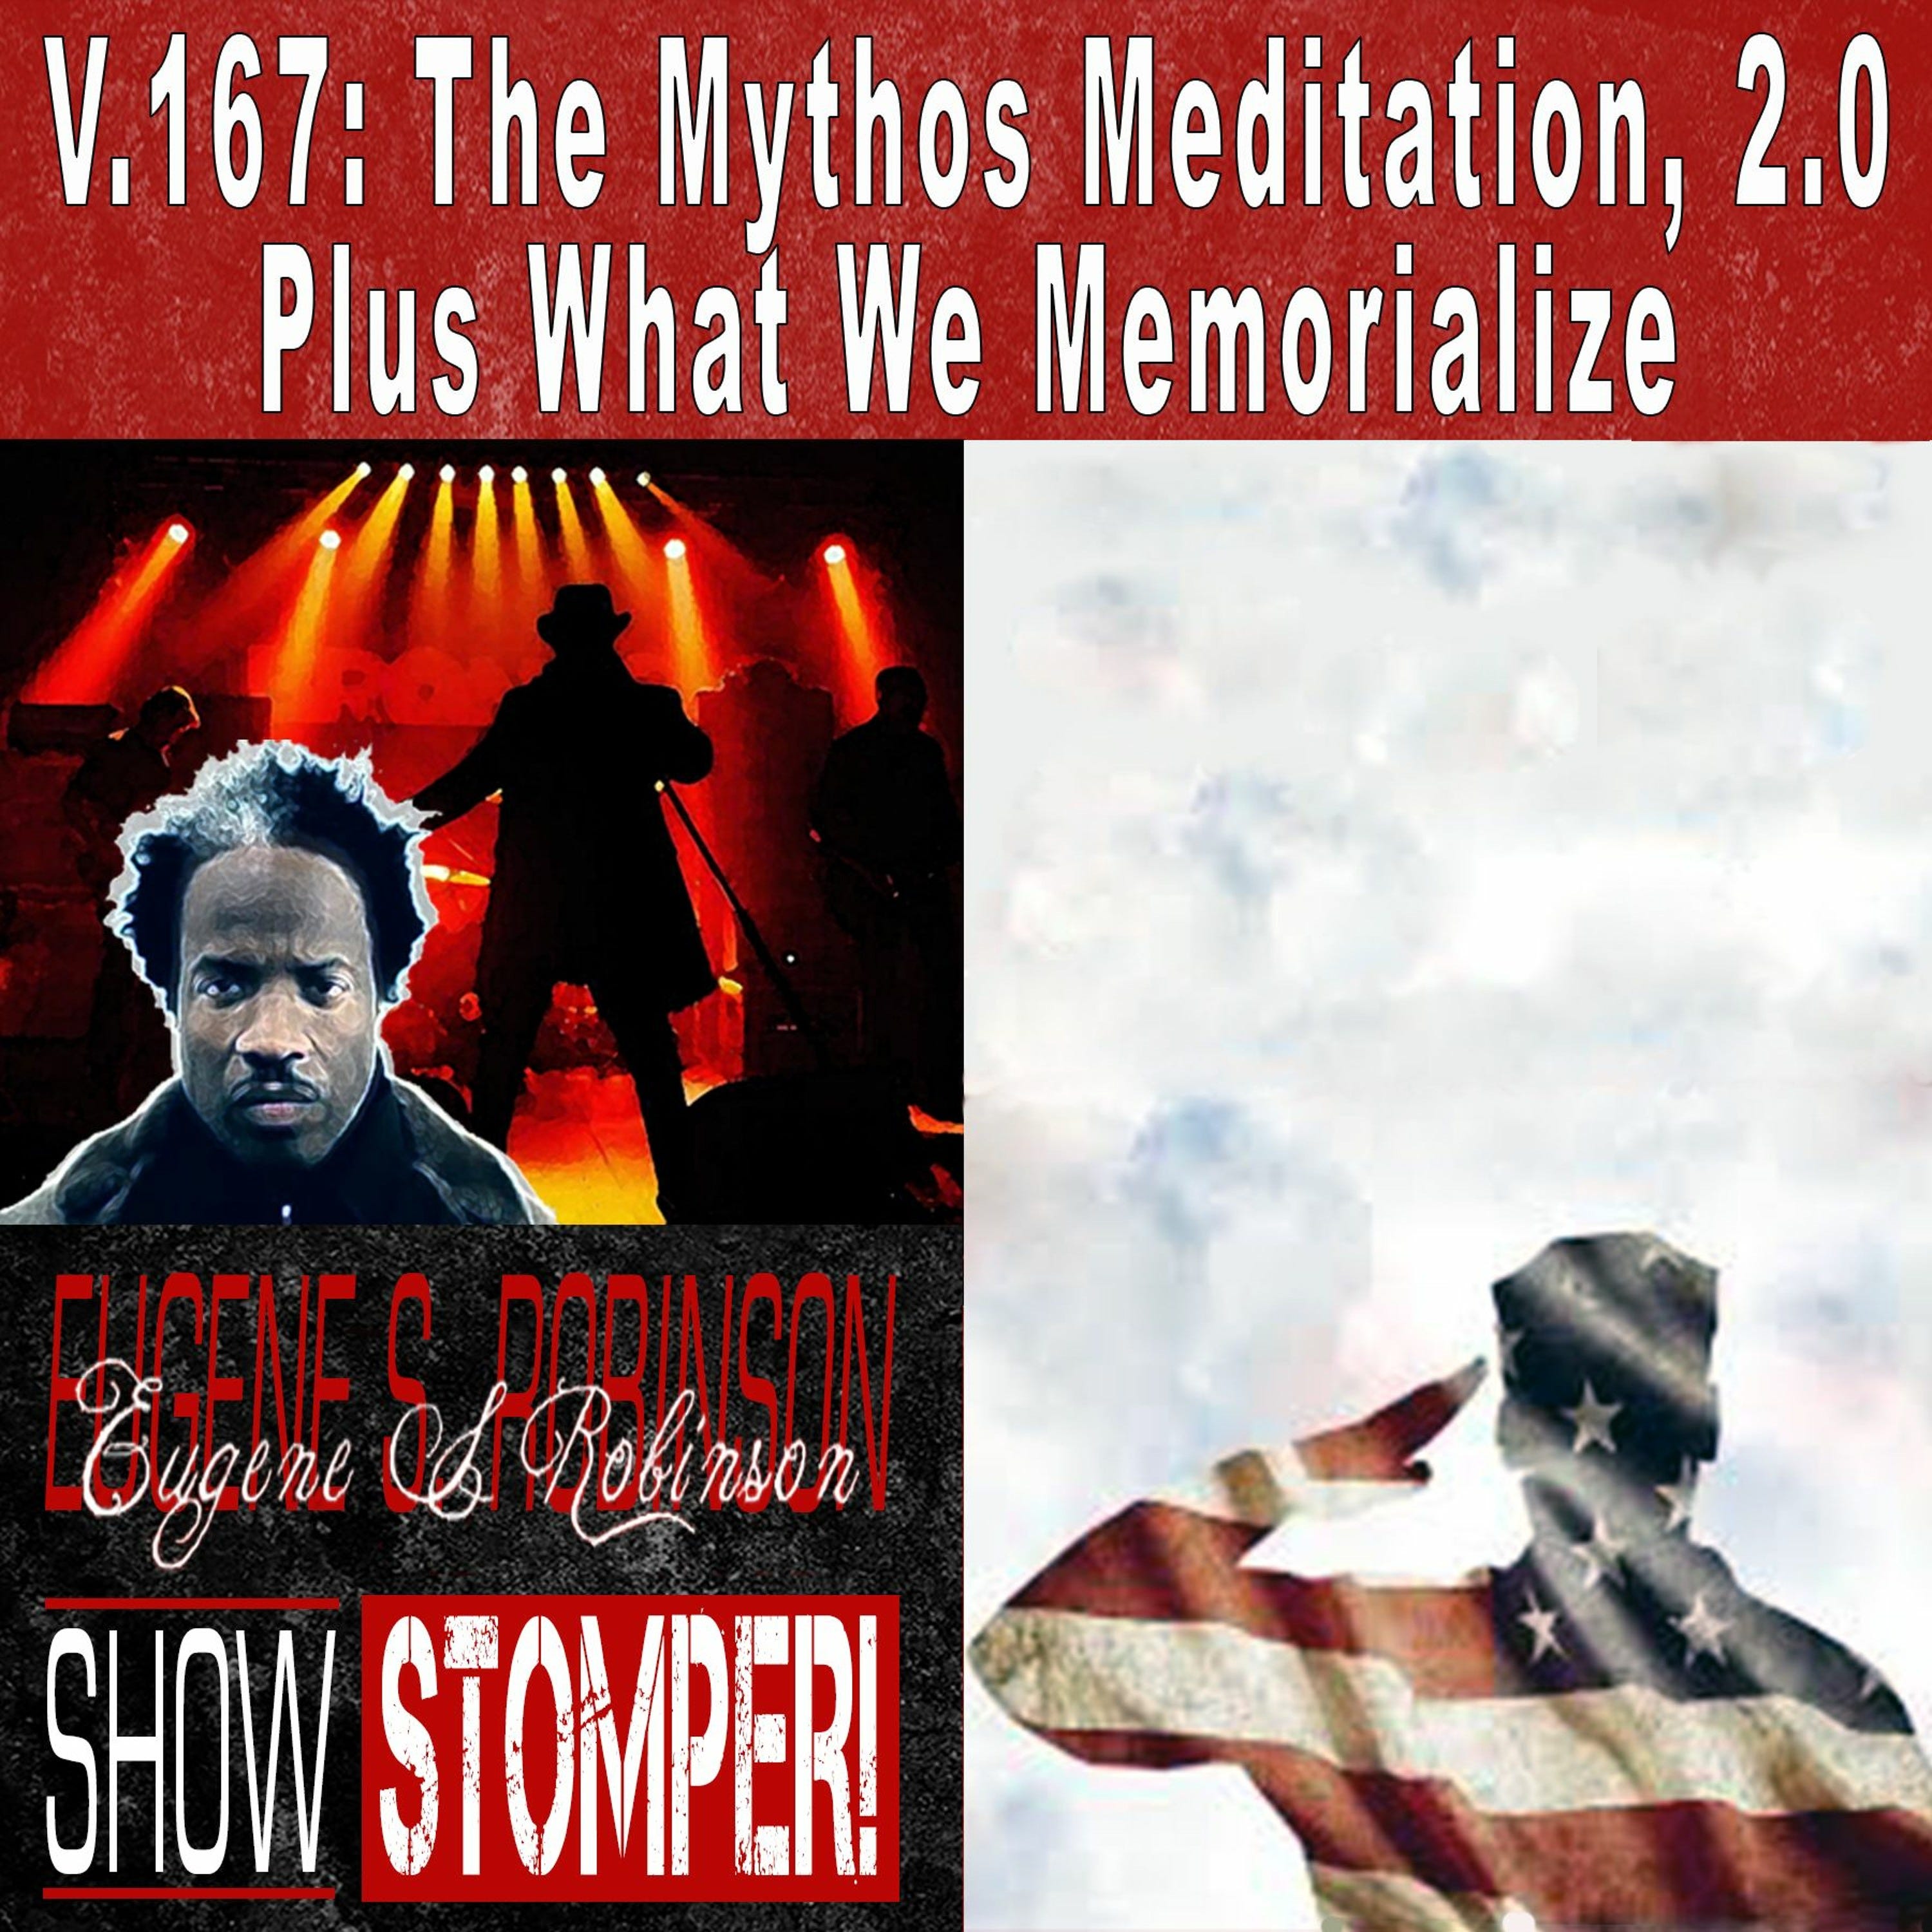 V.167 The Mythos Meditation, 2.0 Plus What We Memorialize On The Eugene S. Robinson Show Stomper!